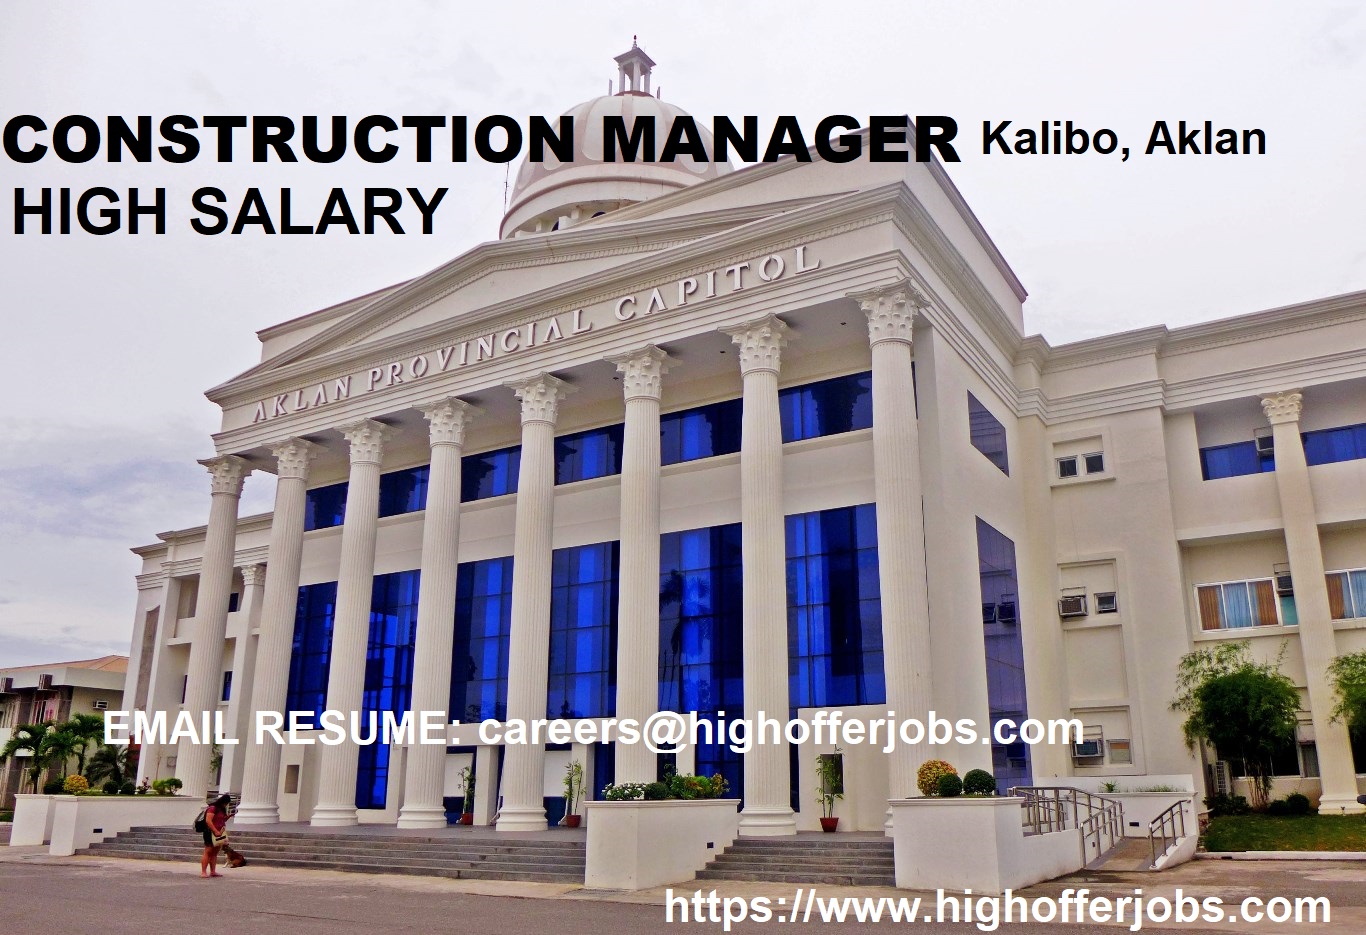 CONSTRUCTION MANAGER - Kalibo, Aklan (HIGH SALARY)